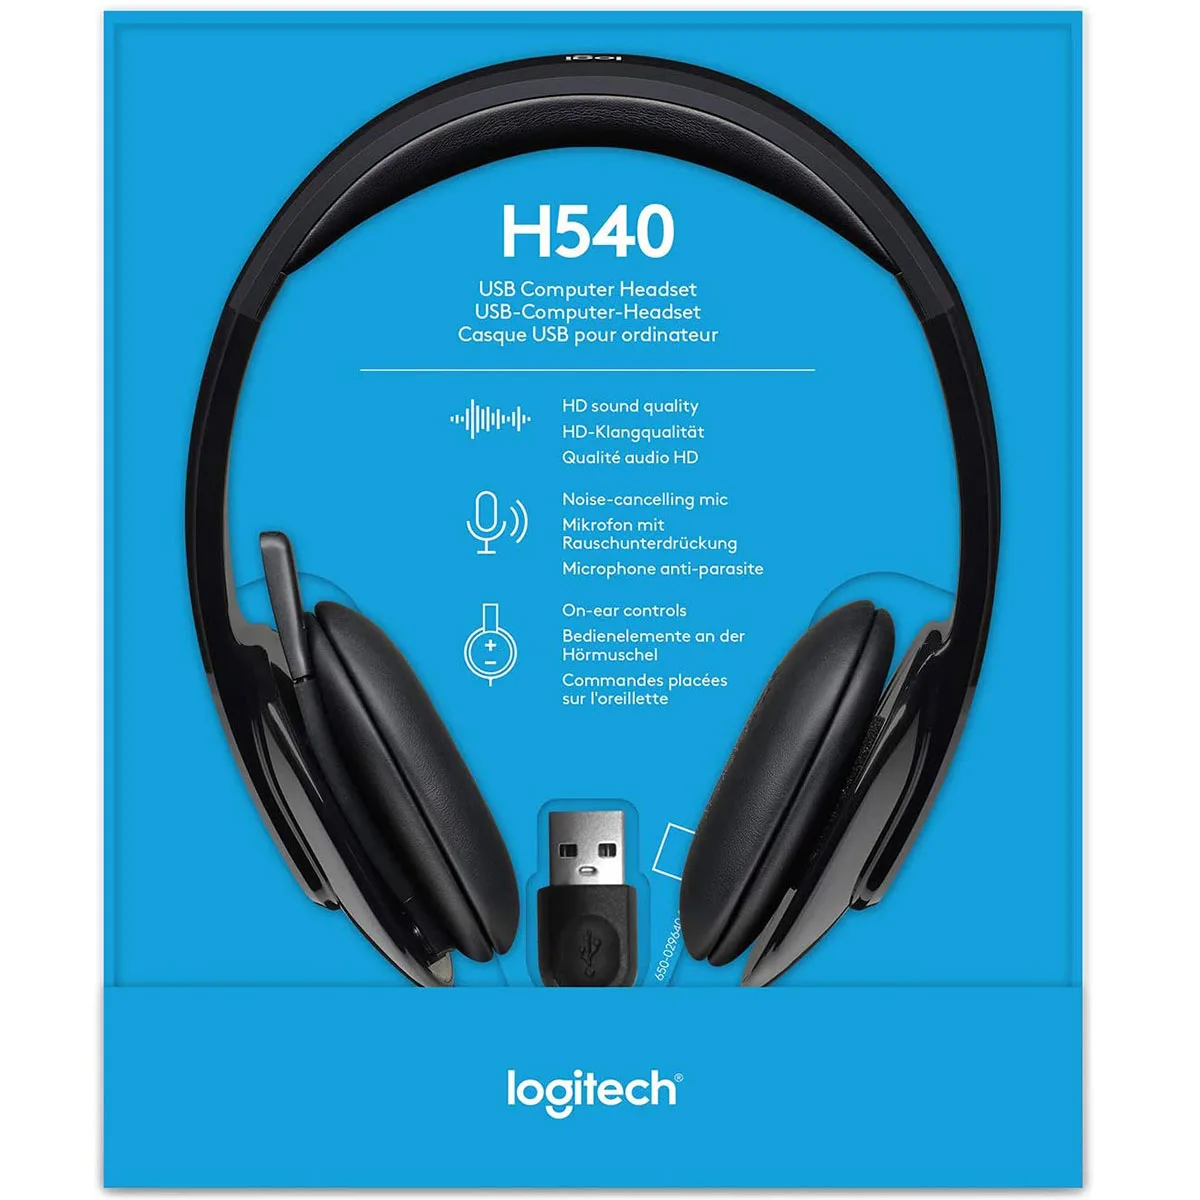 Logitech-H540-USB-Computer-Headset-with-Noise-Canceling-Mic-default